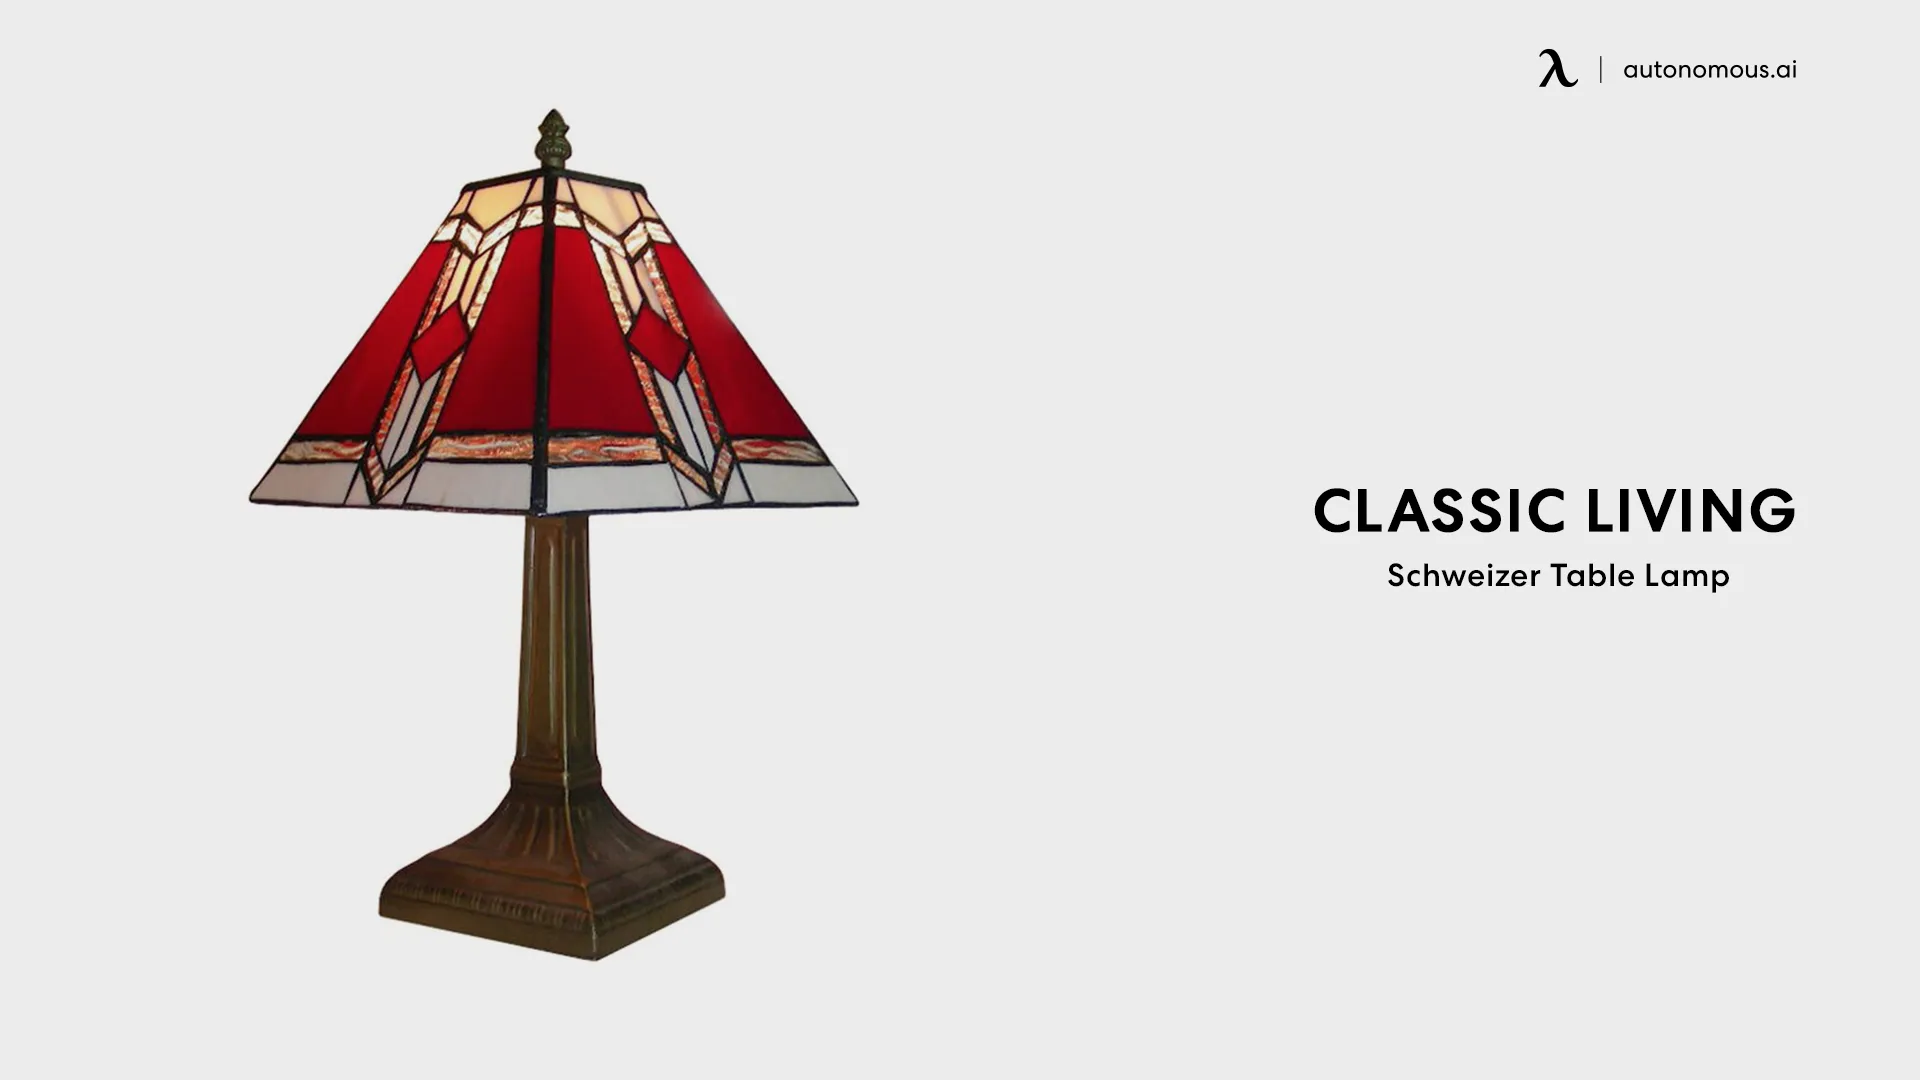 Schweizer Table Lamp - vintage brass desk lamp